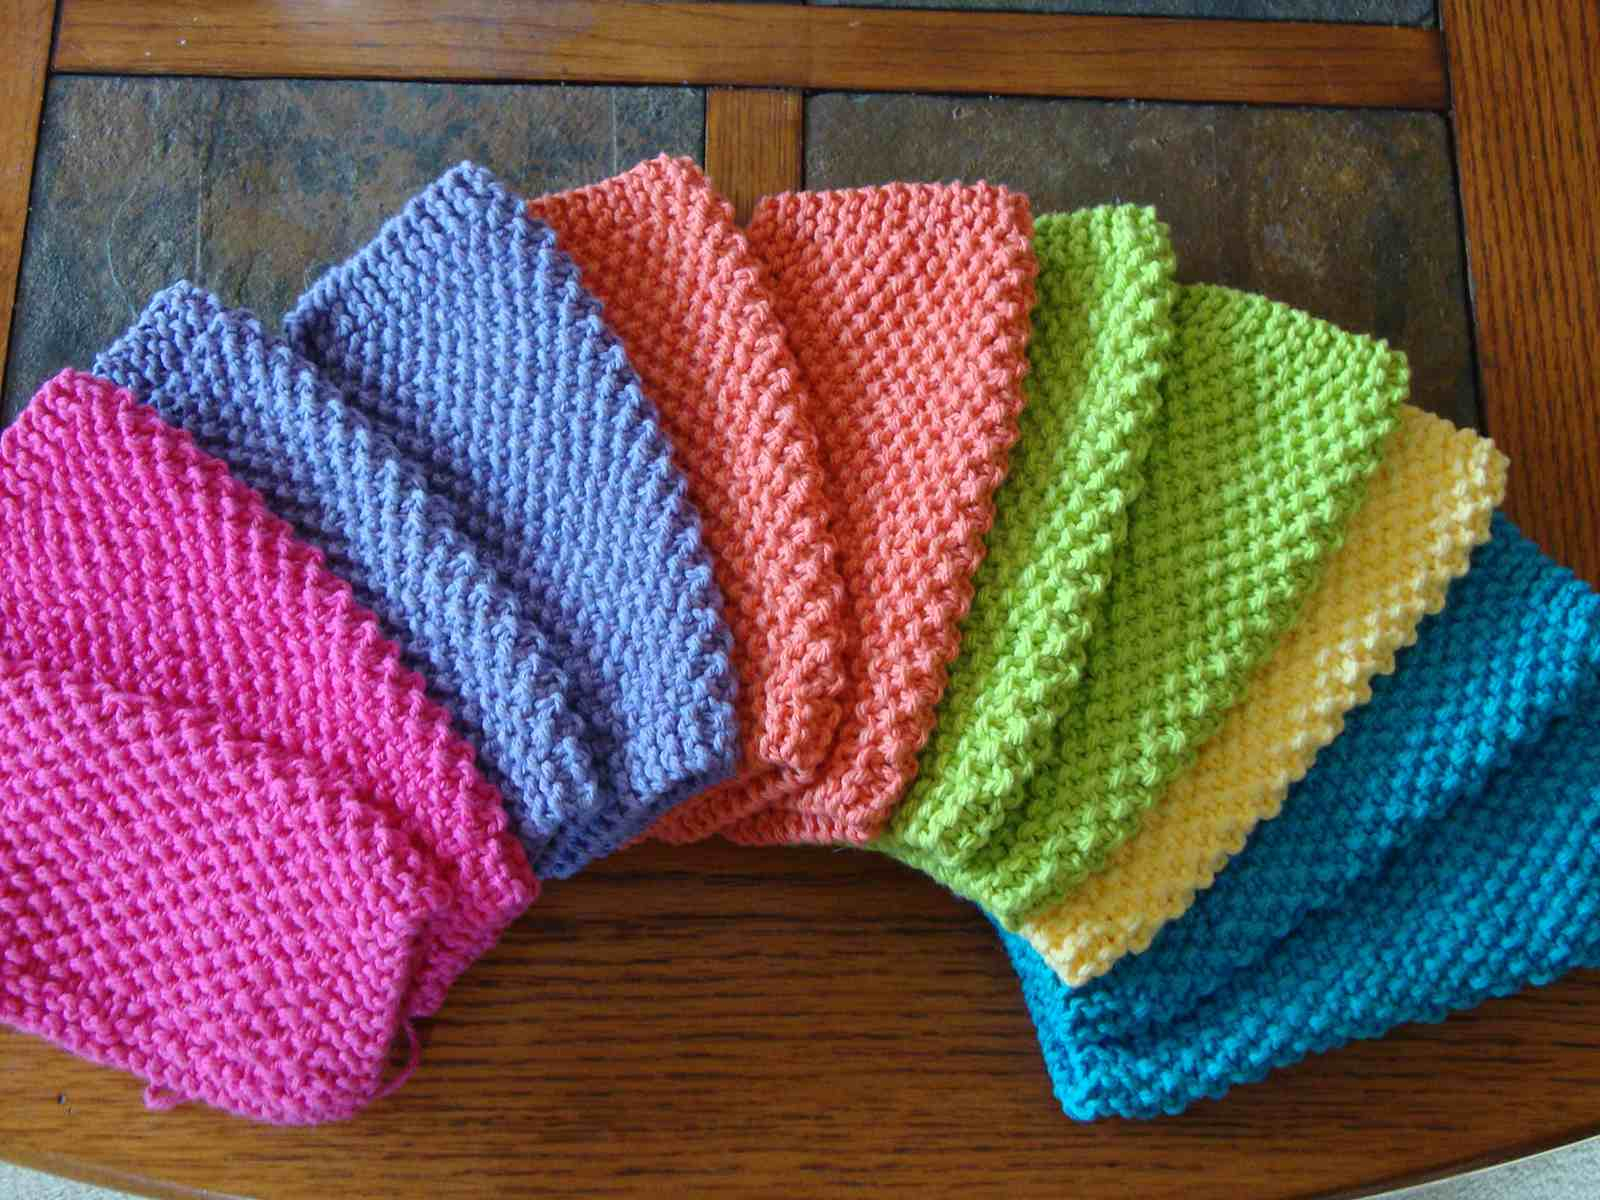 Heart Shaped Dishcloth Knitting Pattern 10 Knit Dishcloth Patterns For Beginners